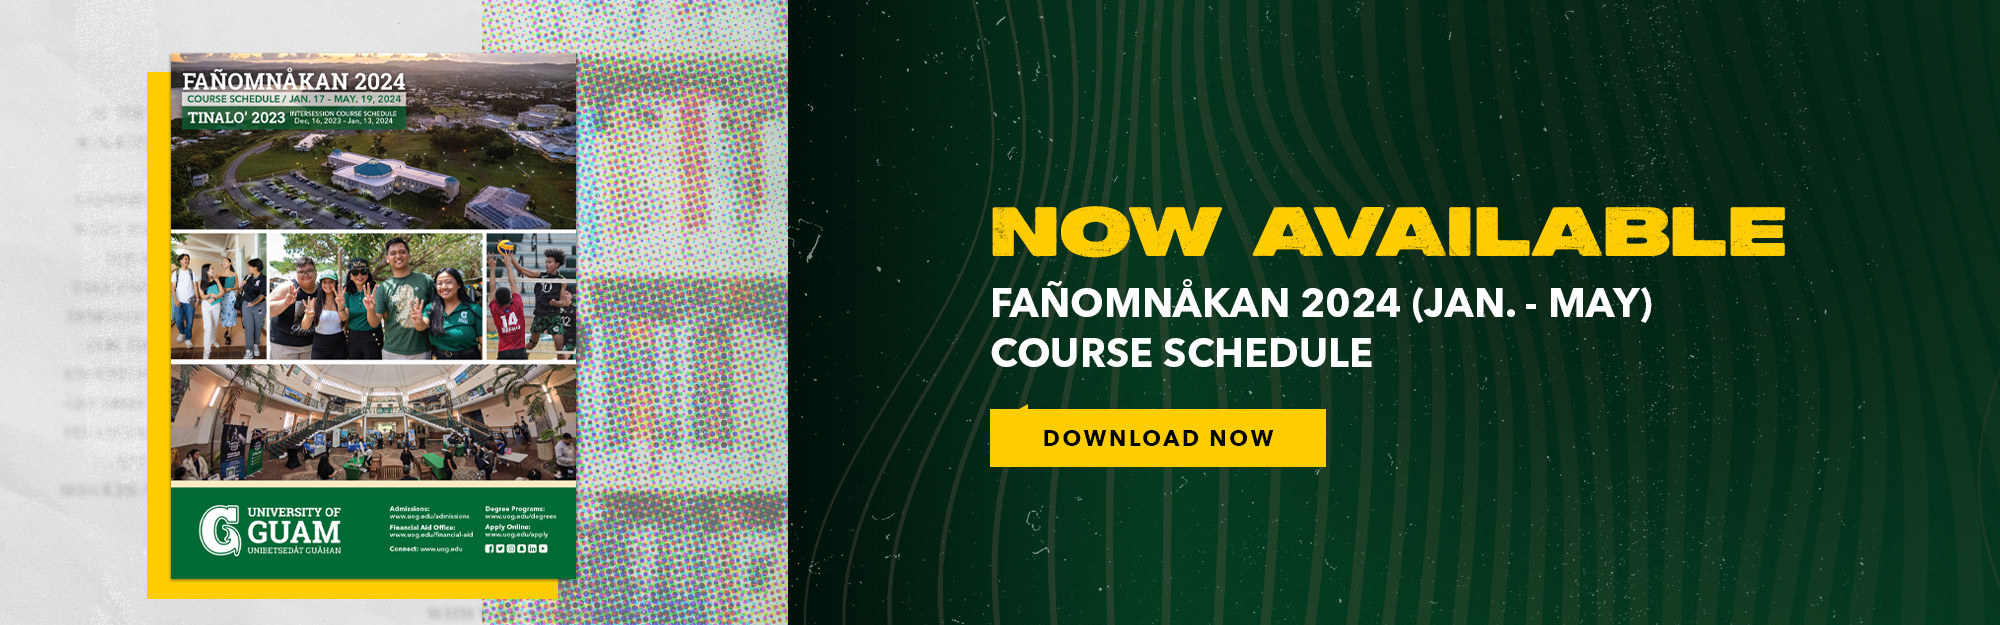 Fañomnåkan 2024 Course Schedule now available